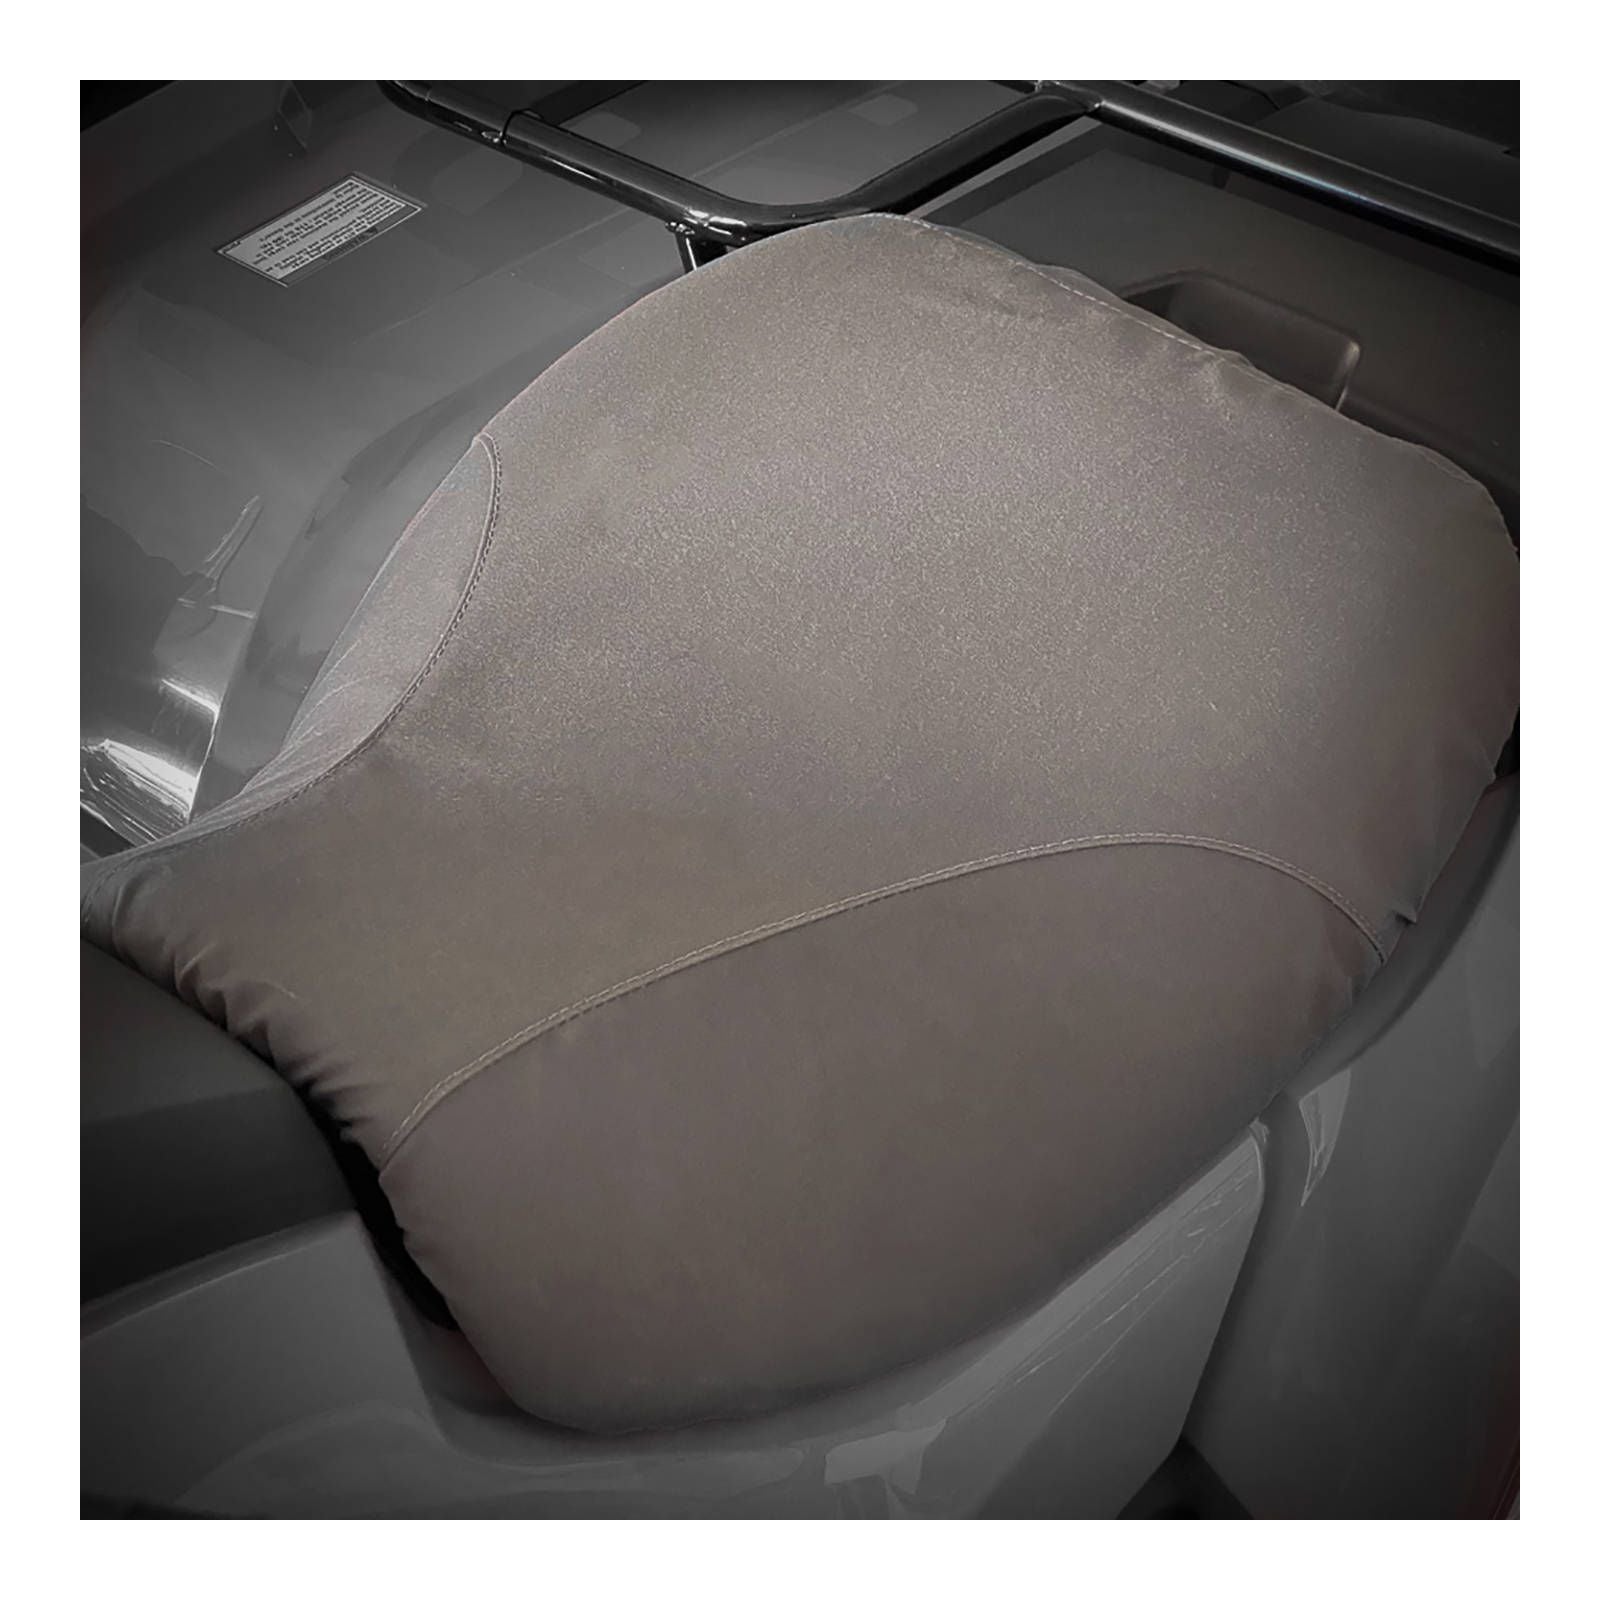 New WHITES OE Vinyl Seat Cover - Black For Suzuki DRZ400 #WPSCS0324